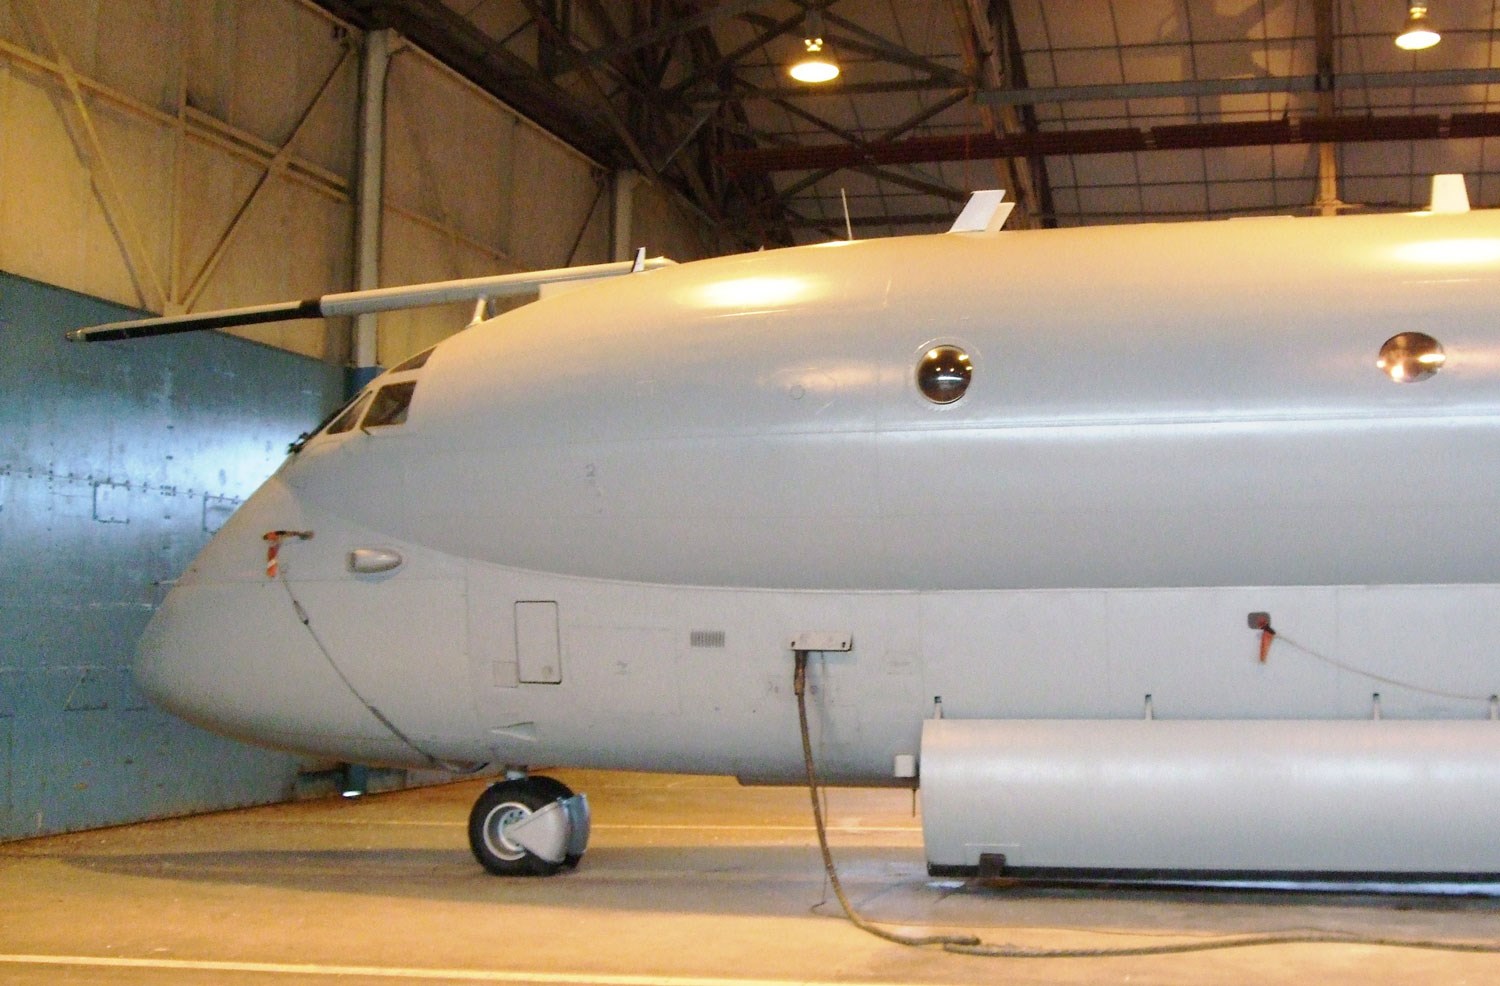 The Nimrod fuselage at RAF Kinloss